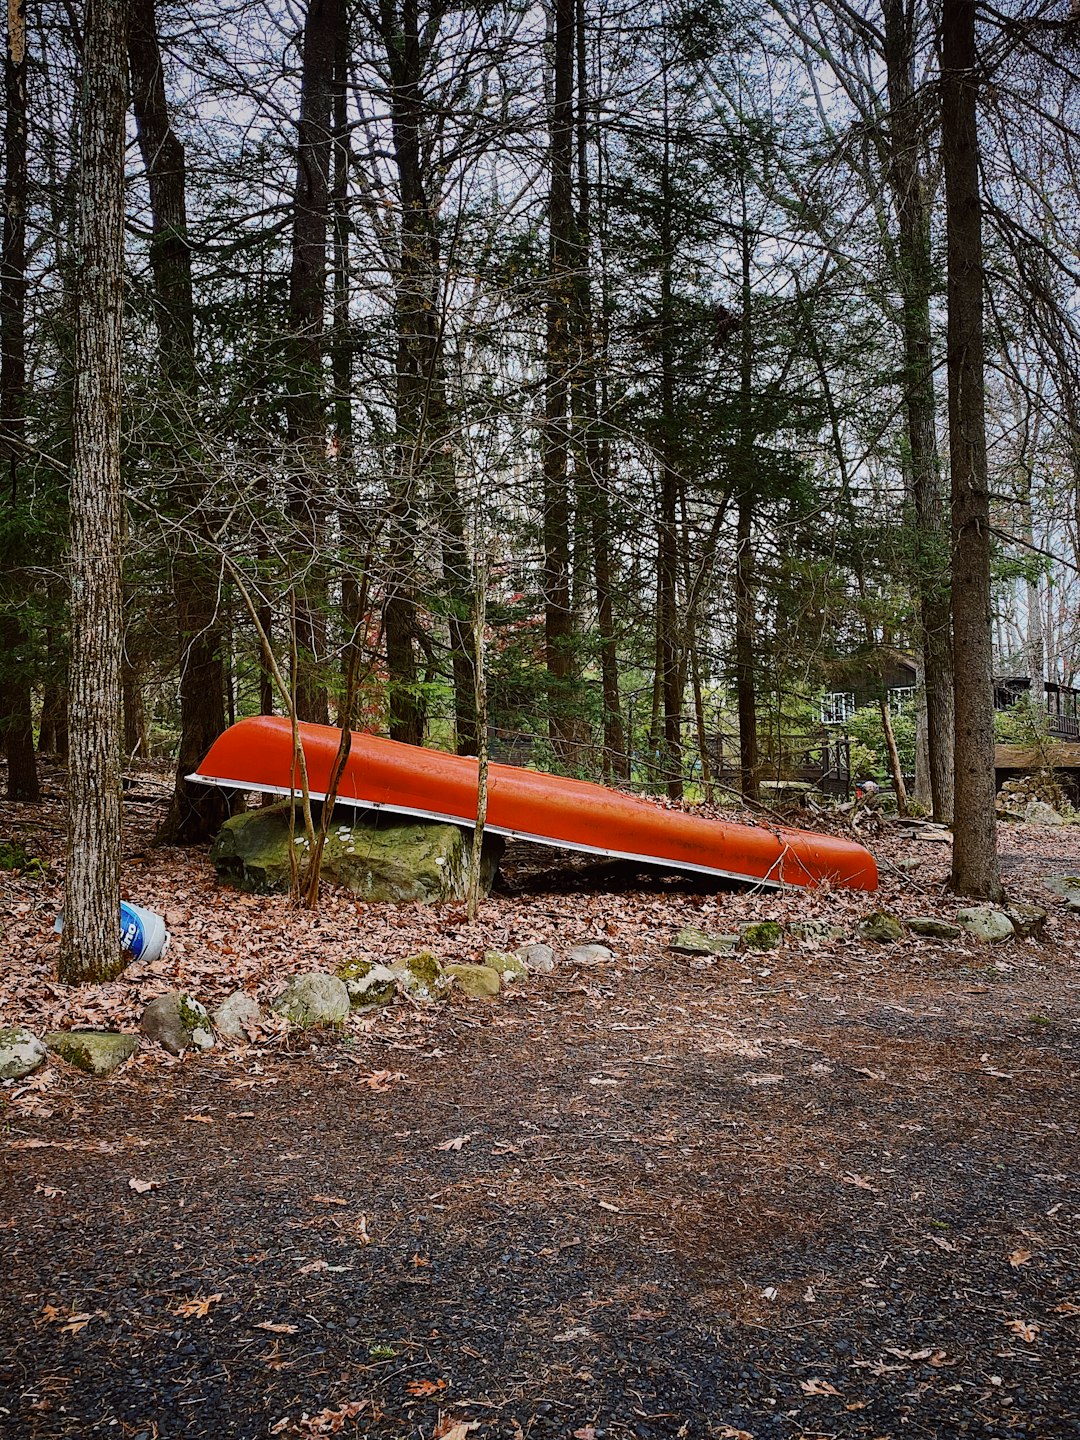 orange kayak on brown soil surrounded by trees during daytime